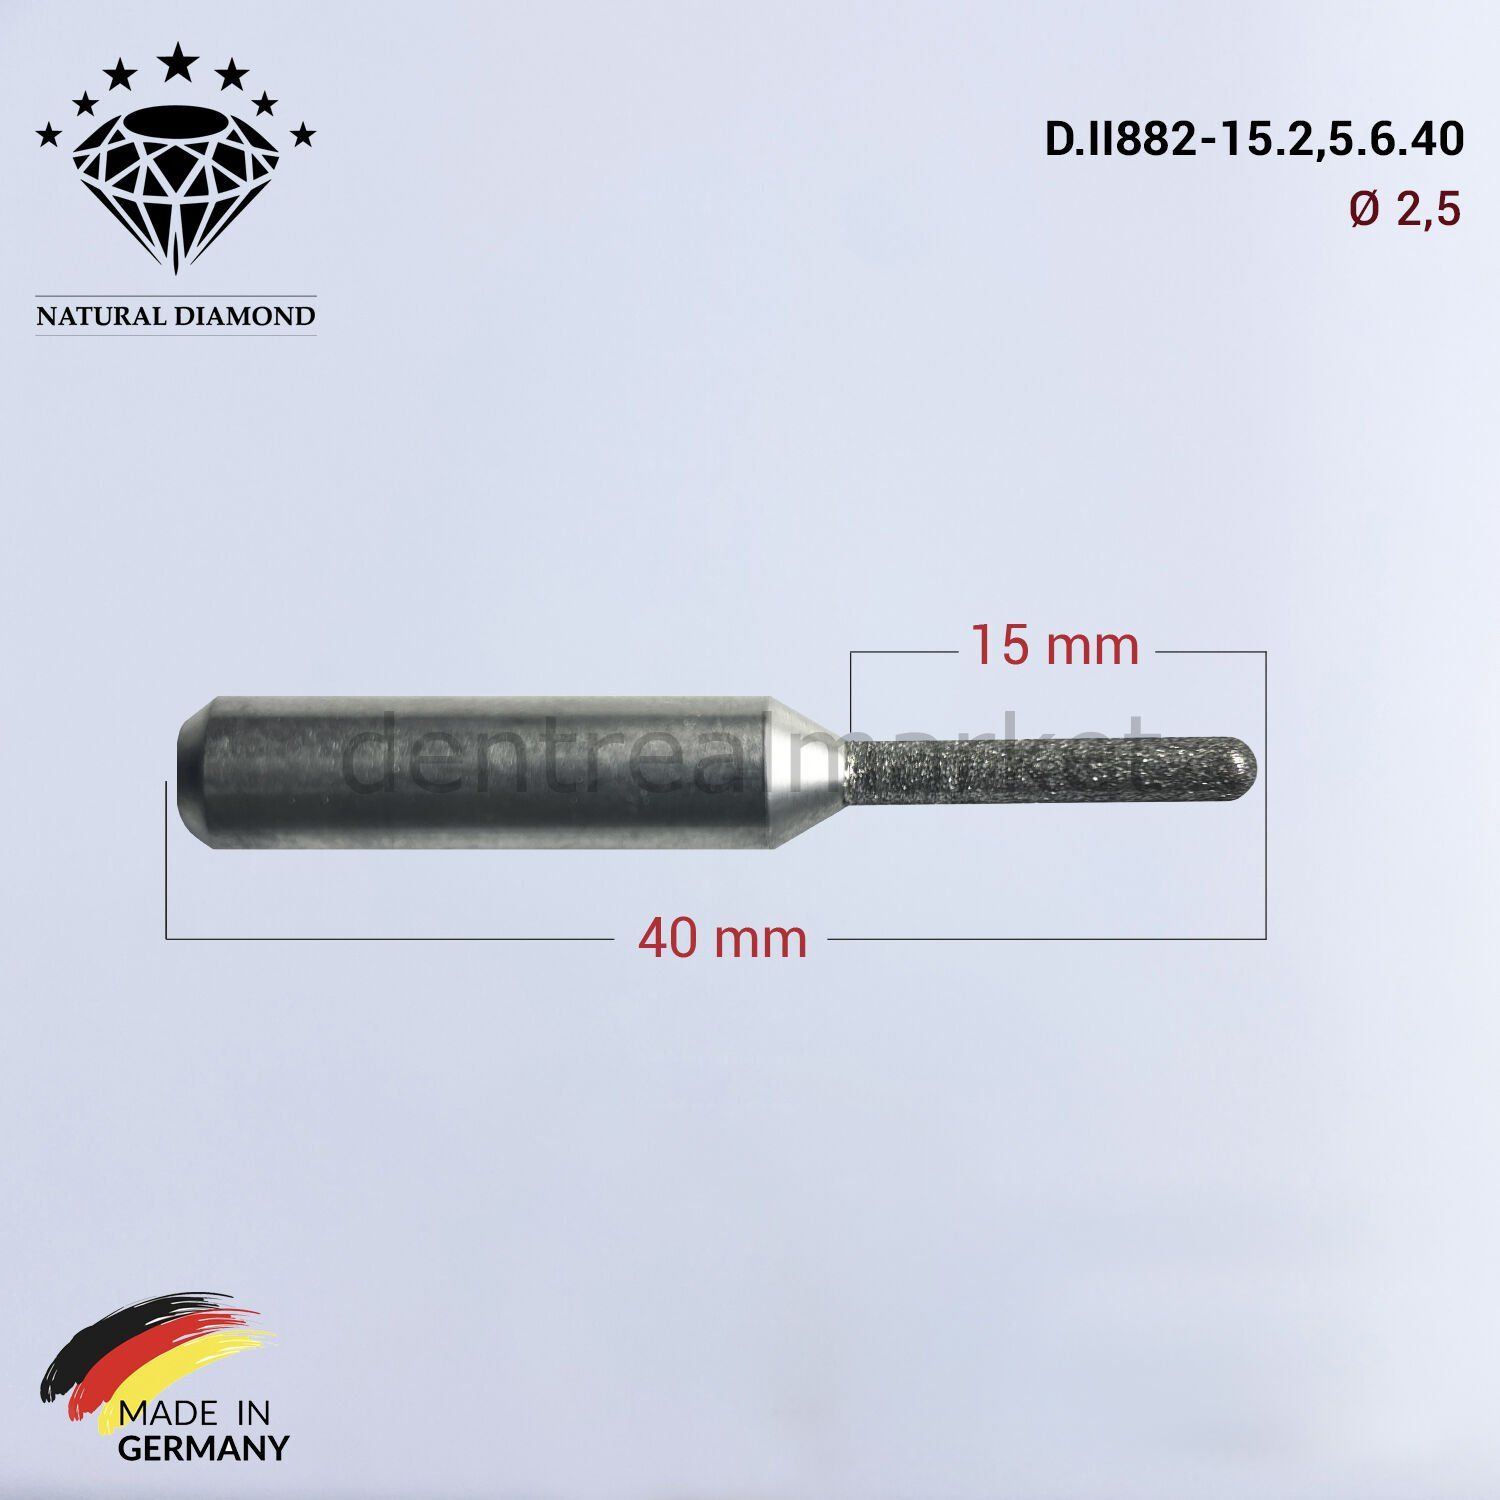 Imes Icore Wieland Elmas Cad Cam Drill 2,5 mm